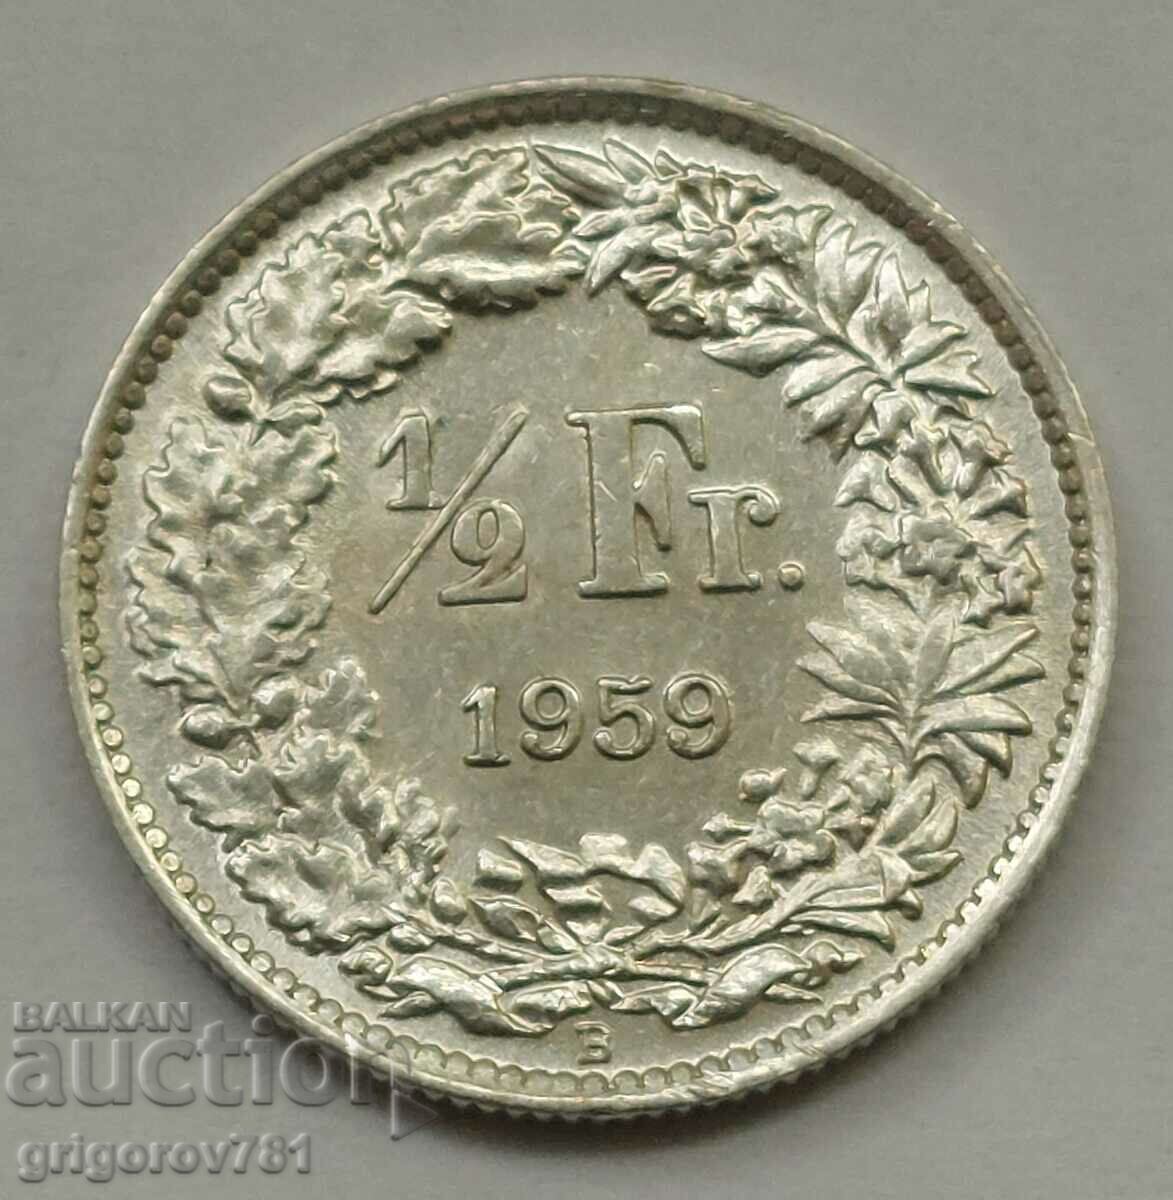 1/2 Franc Silver Switzerland 1959 B - Silver Coin #148